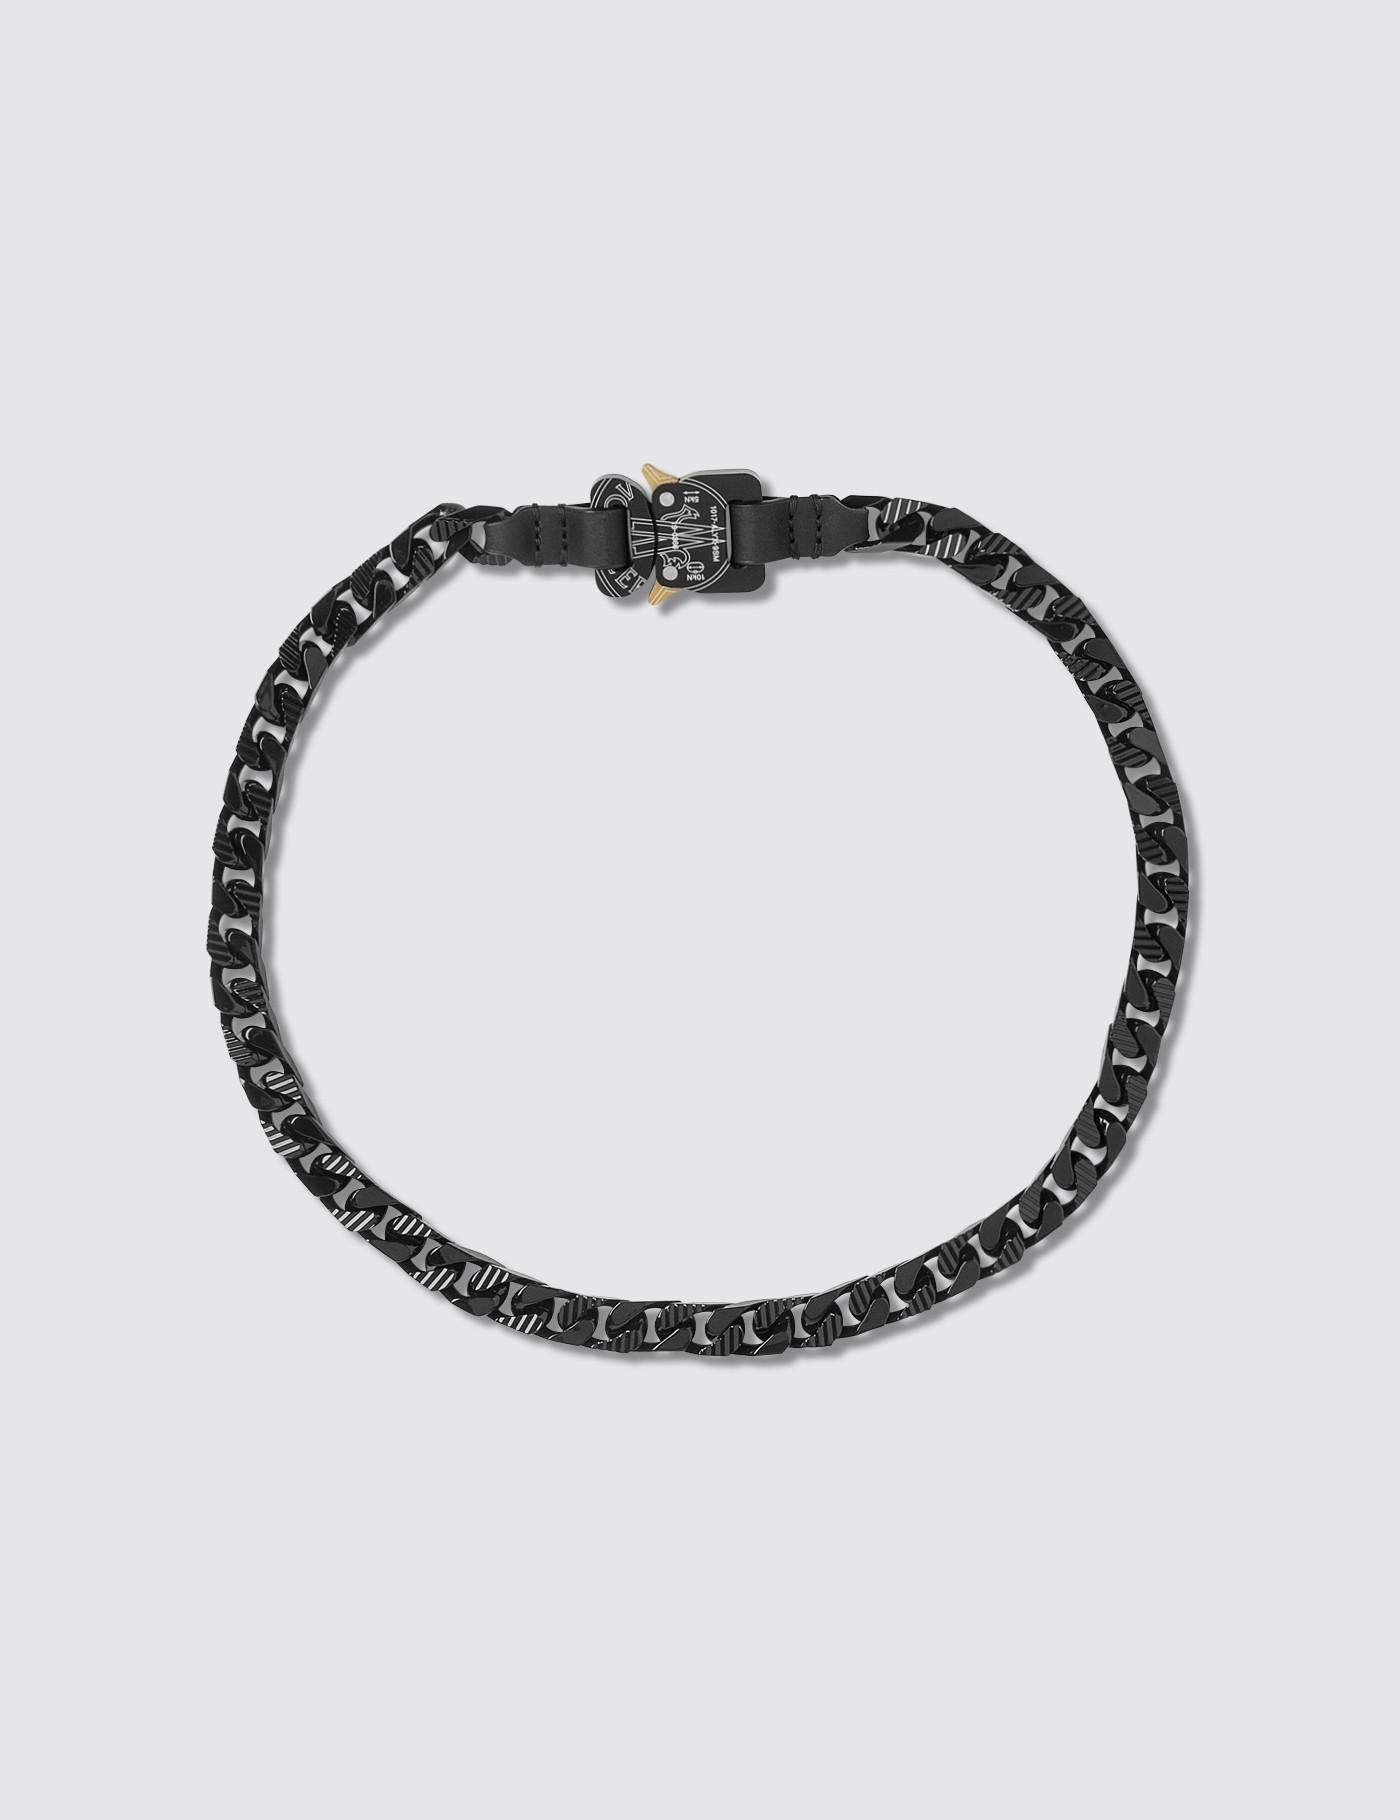 Moncler Genius X 1017 Alyx 9sm Necklace in Black for Men - Lyst